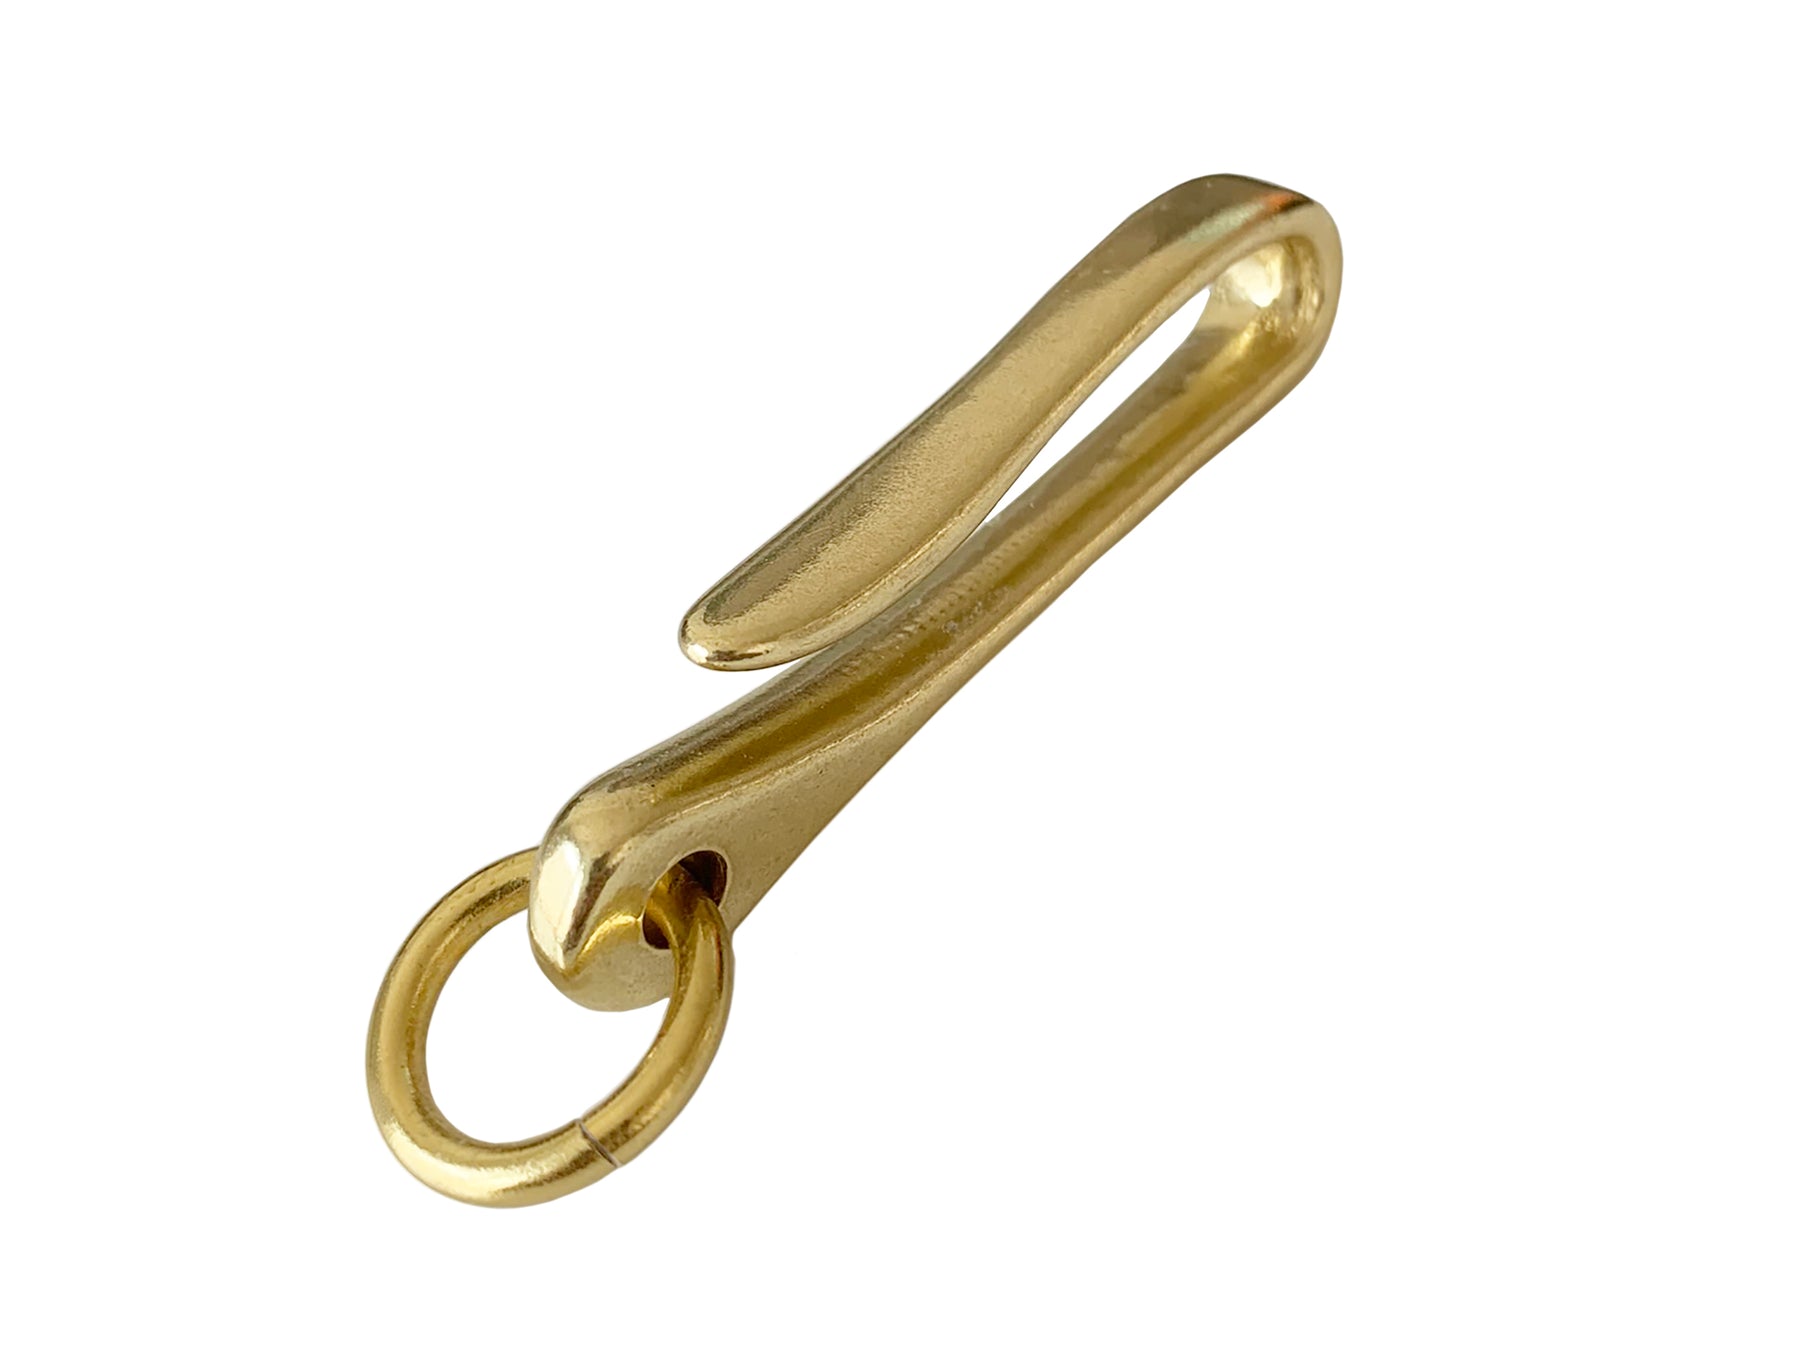 Rocky Mtn - "Fish Hook" Keychain Hardware (Solid Brass)